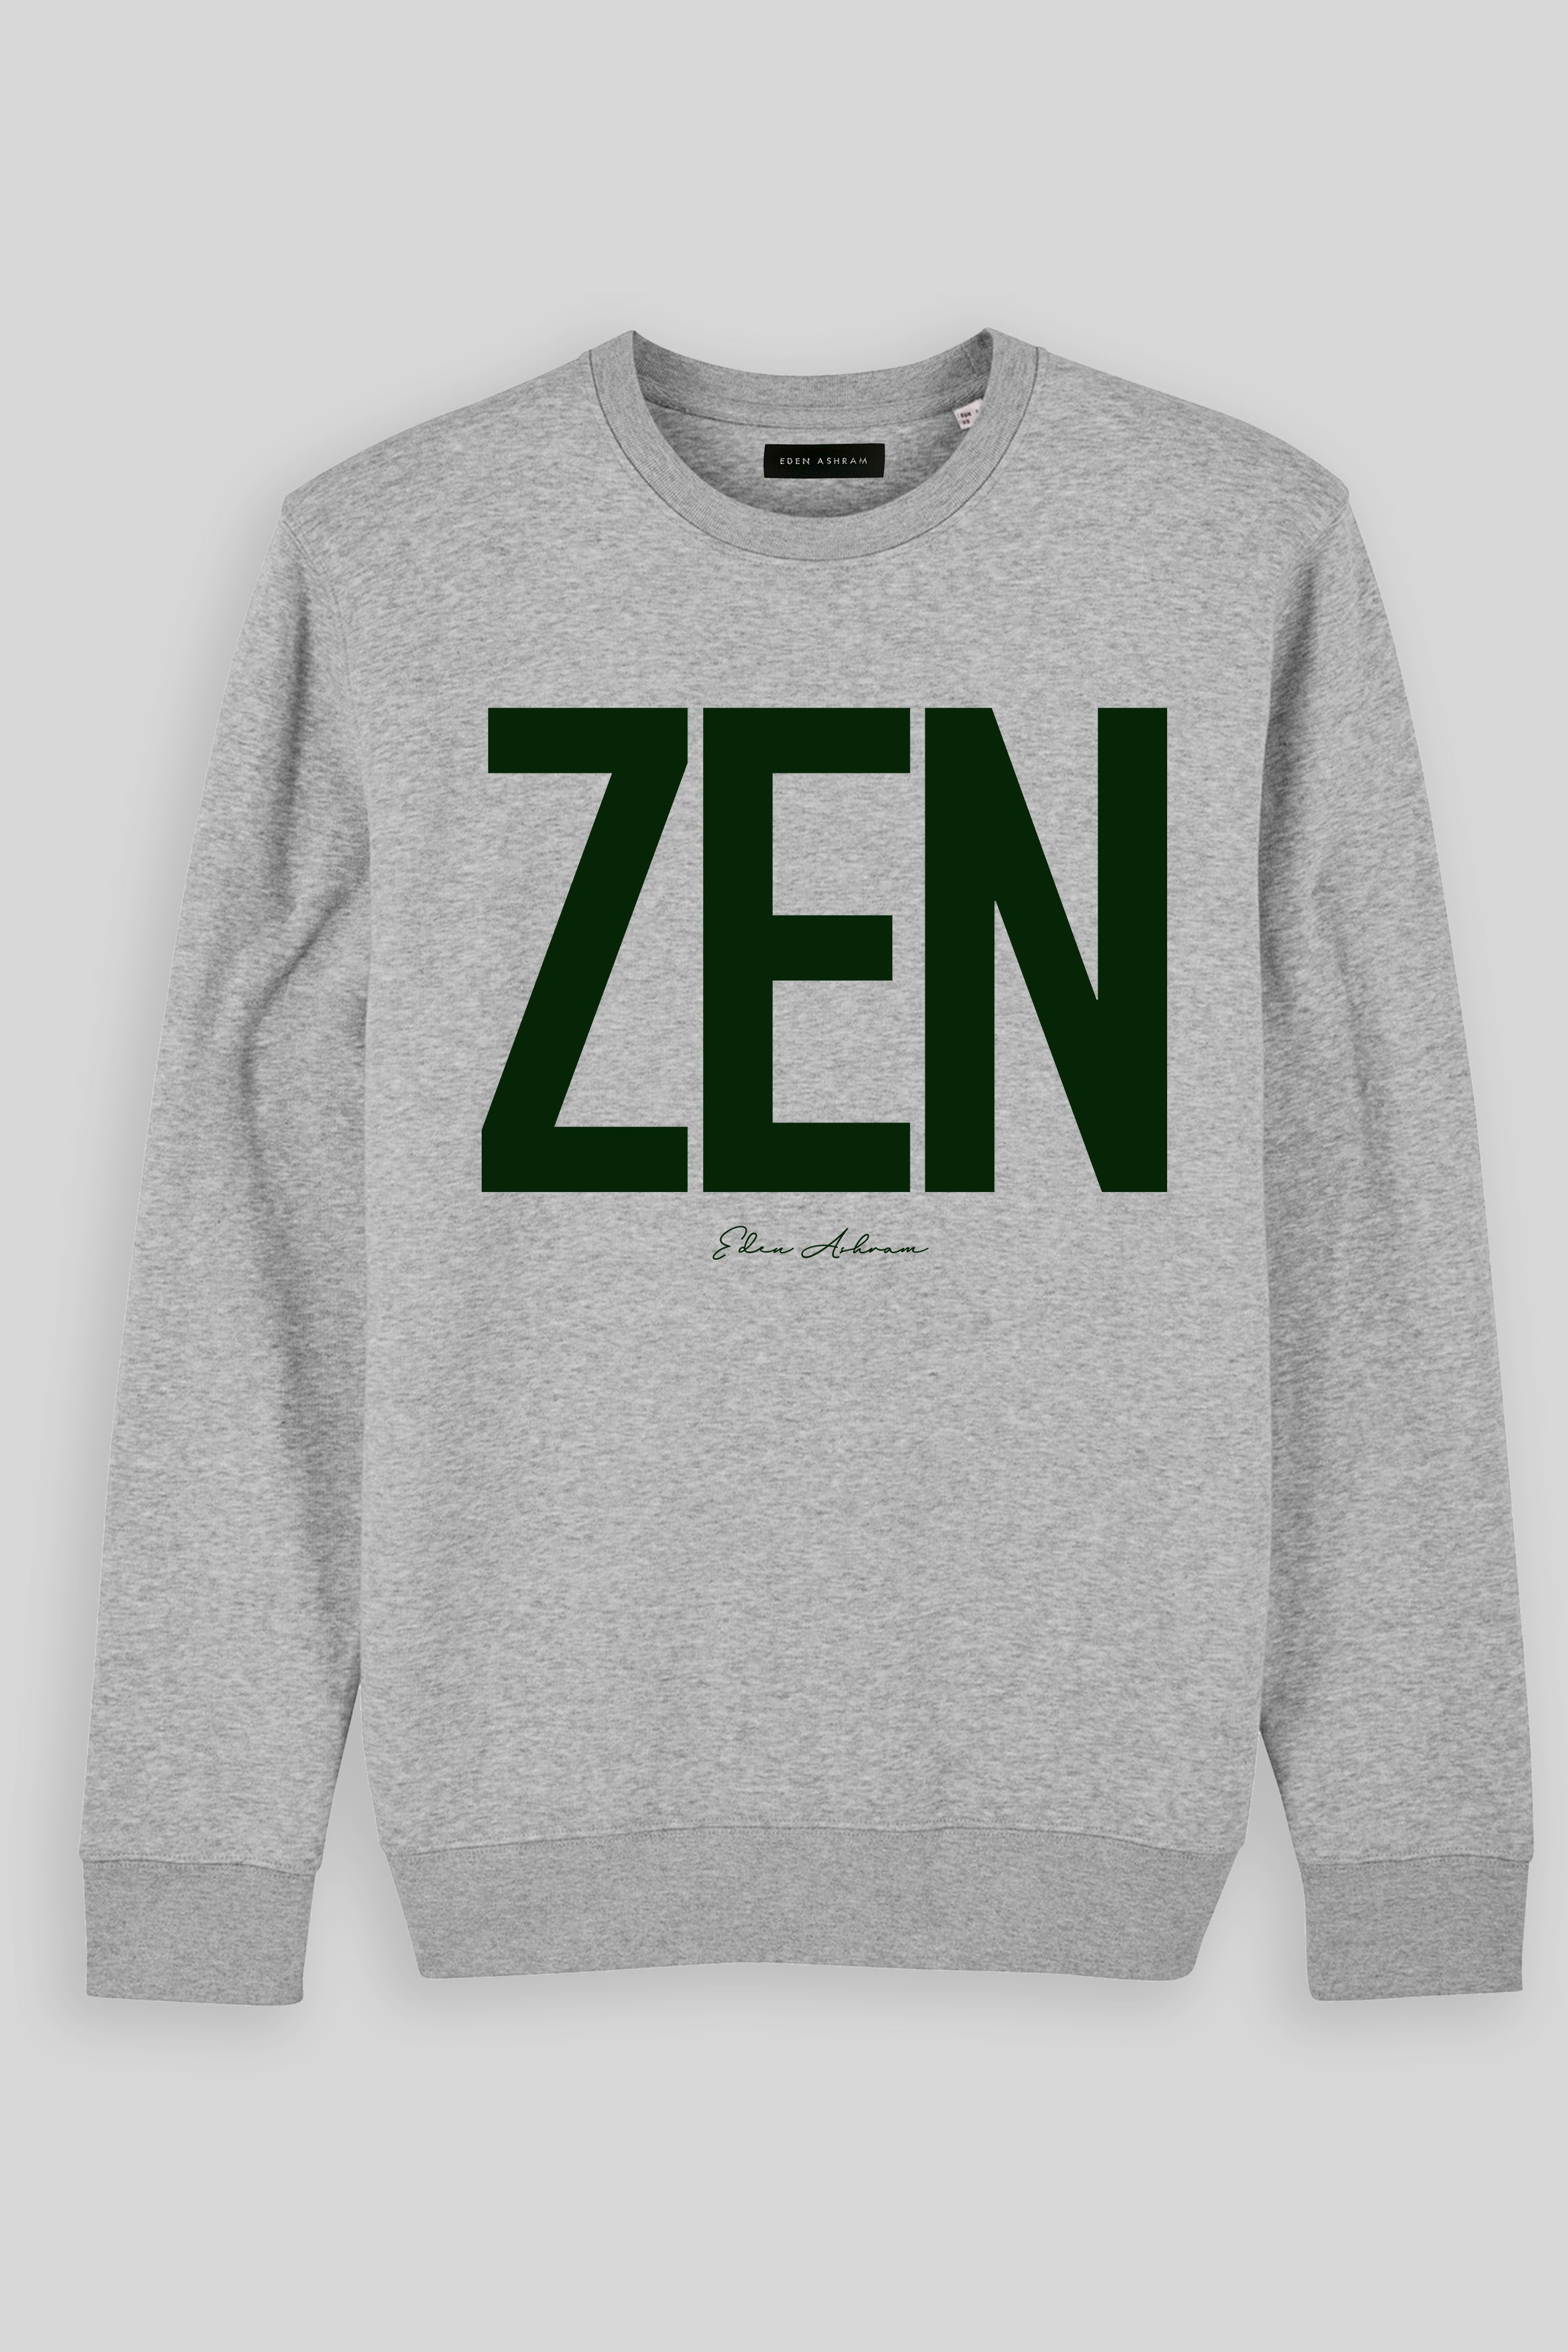 Eden Ashram ZEN Premium Crew Neck Sweatshirt Heather Grey